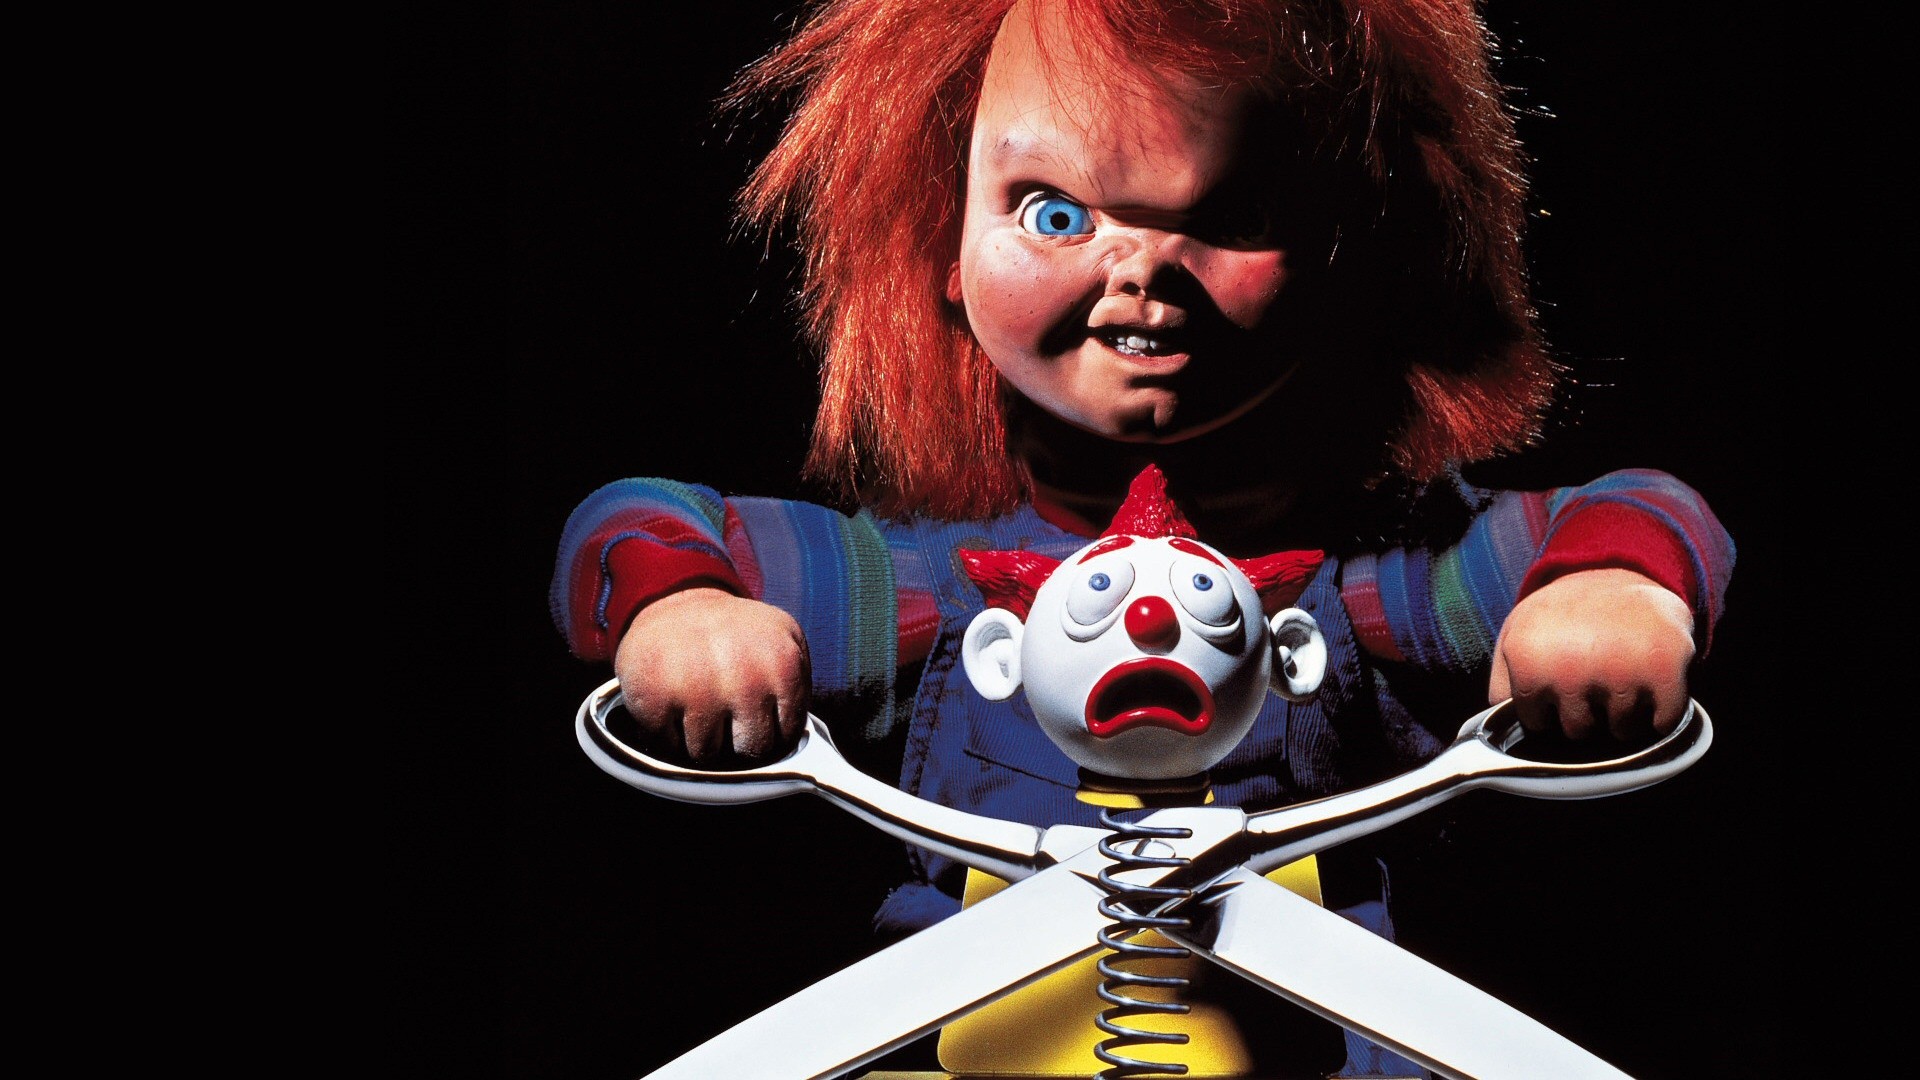 Chucky Doll Black Scissors Childs Play Horror dark wallpaper 218906 WallpaperUP